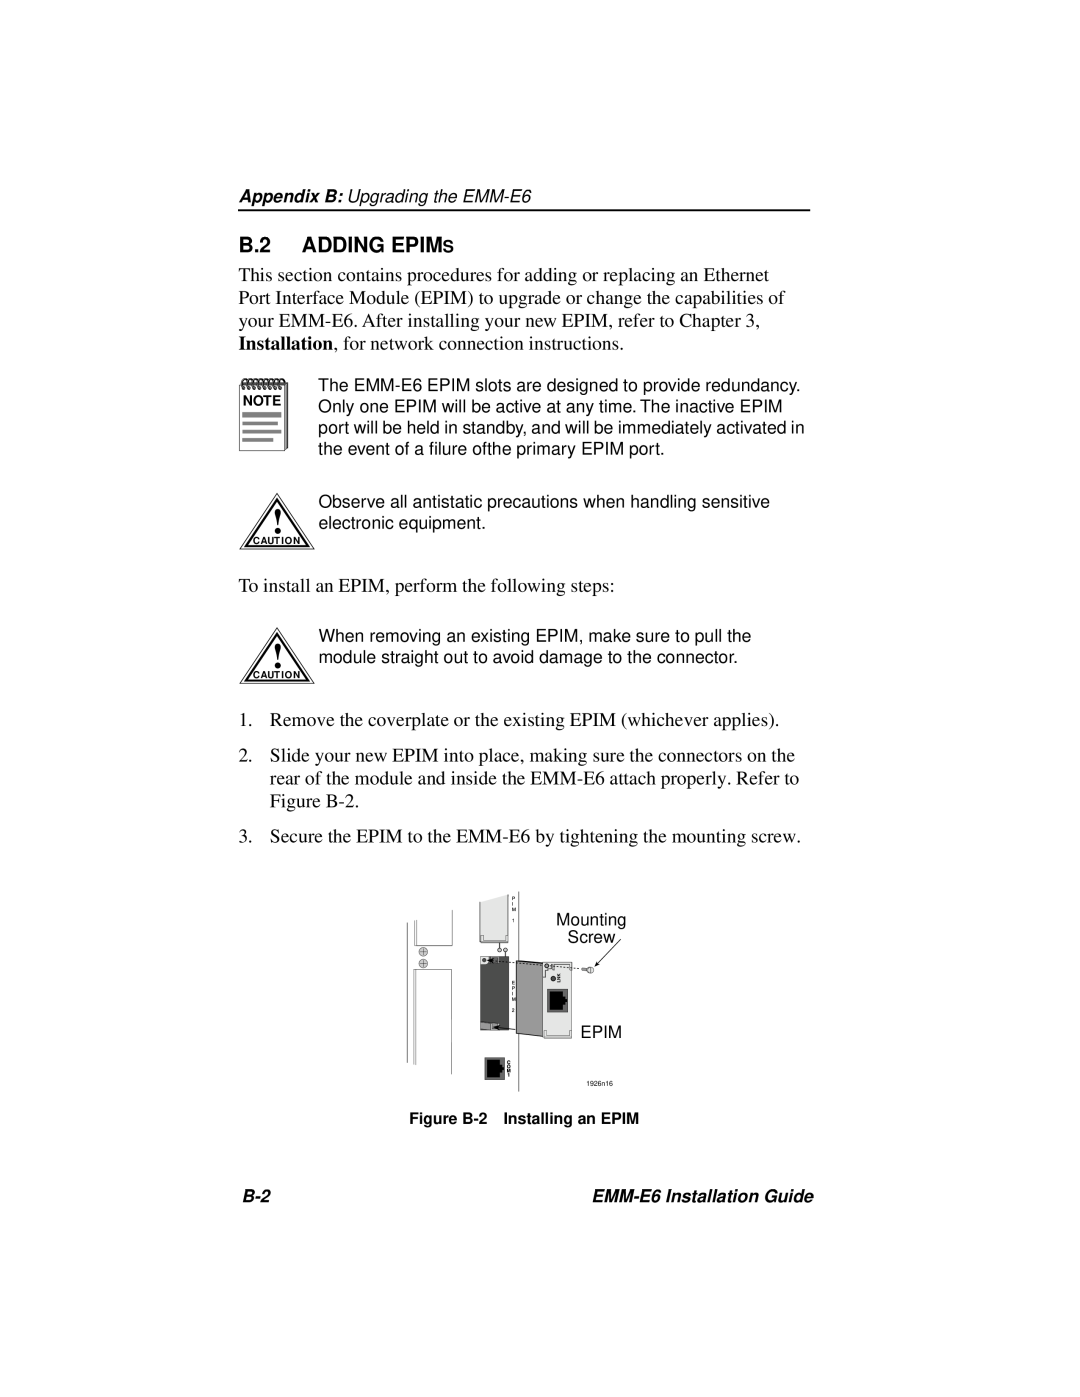 Cabletron Systems EMM-E6 manual B.2 ADDING EPIMS 